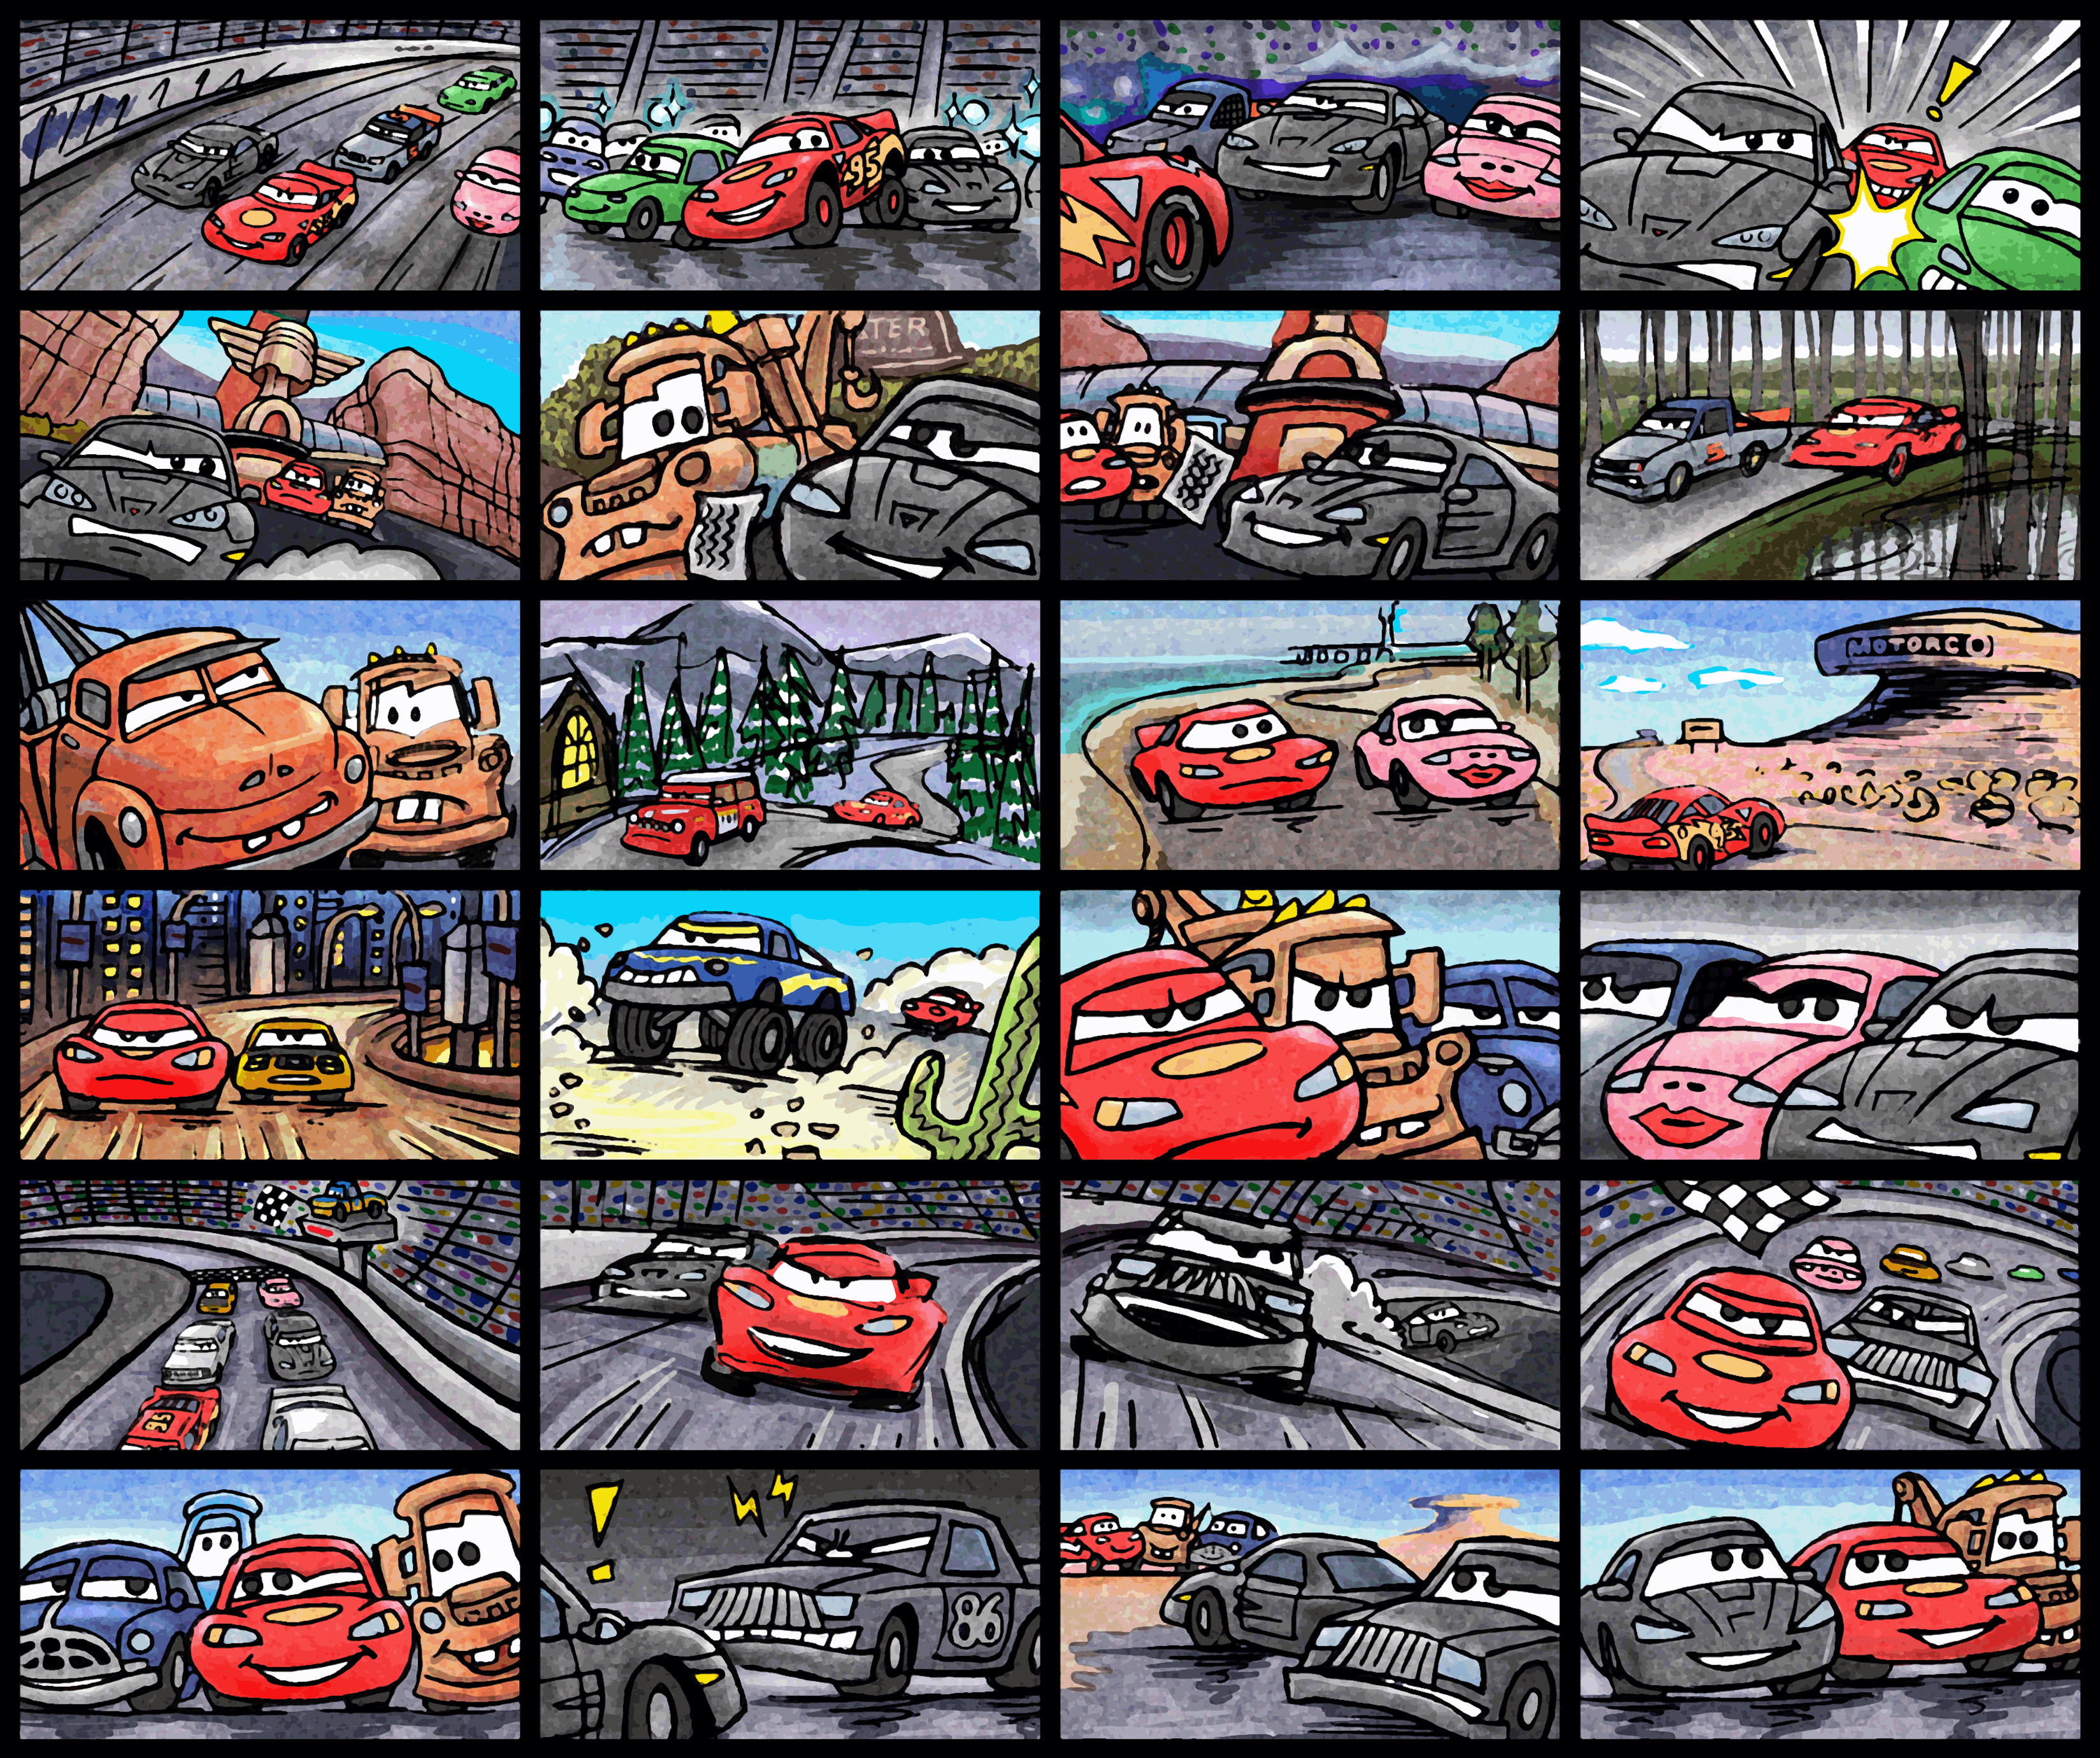 The World of Cars Race-O-Rama, Board Game